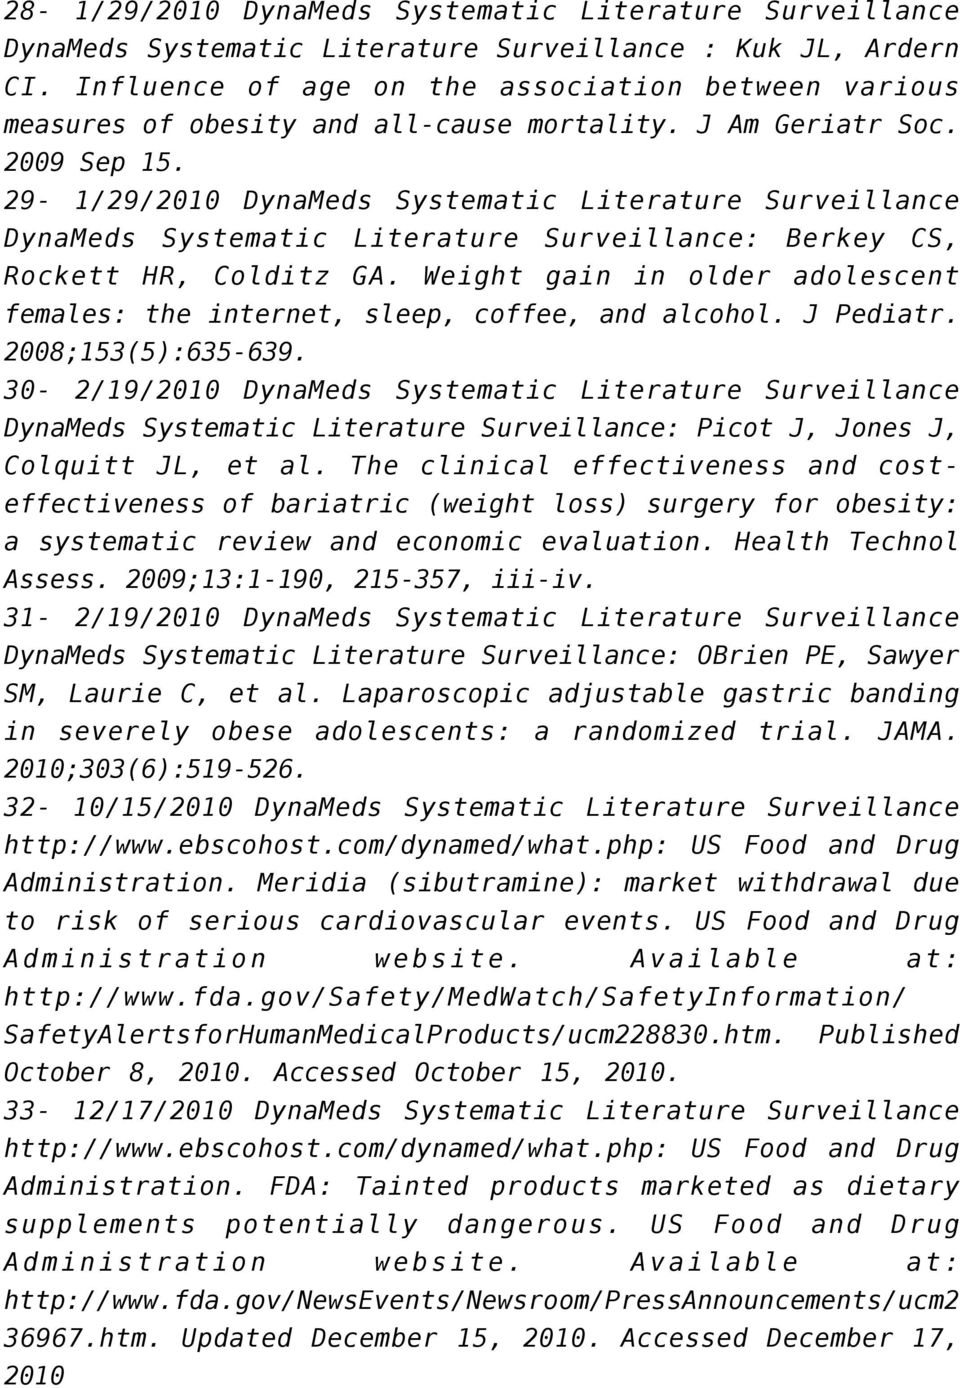 29-1/29/2010 DynaMeds Systematic Literature Surveillance DynaMeds Systematic Literature Surveillance: Berkey CS, Rockett HR, Colditz GA.